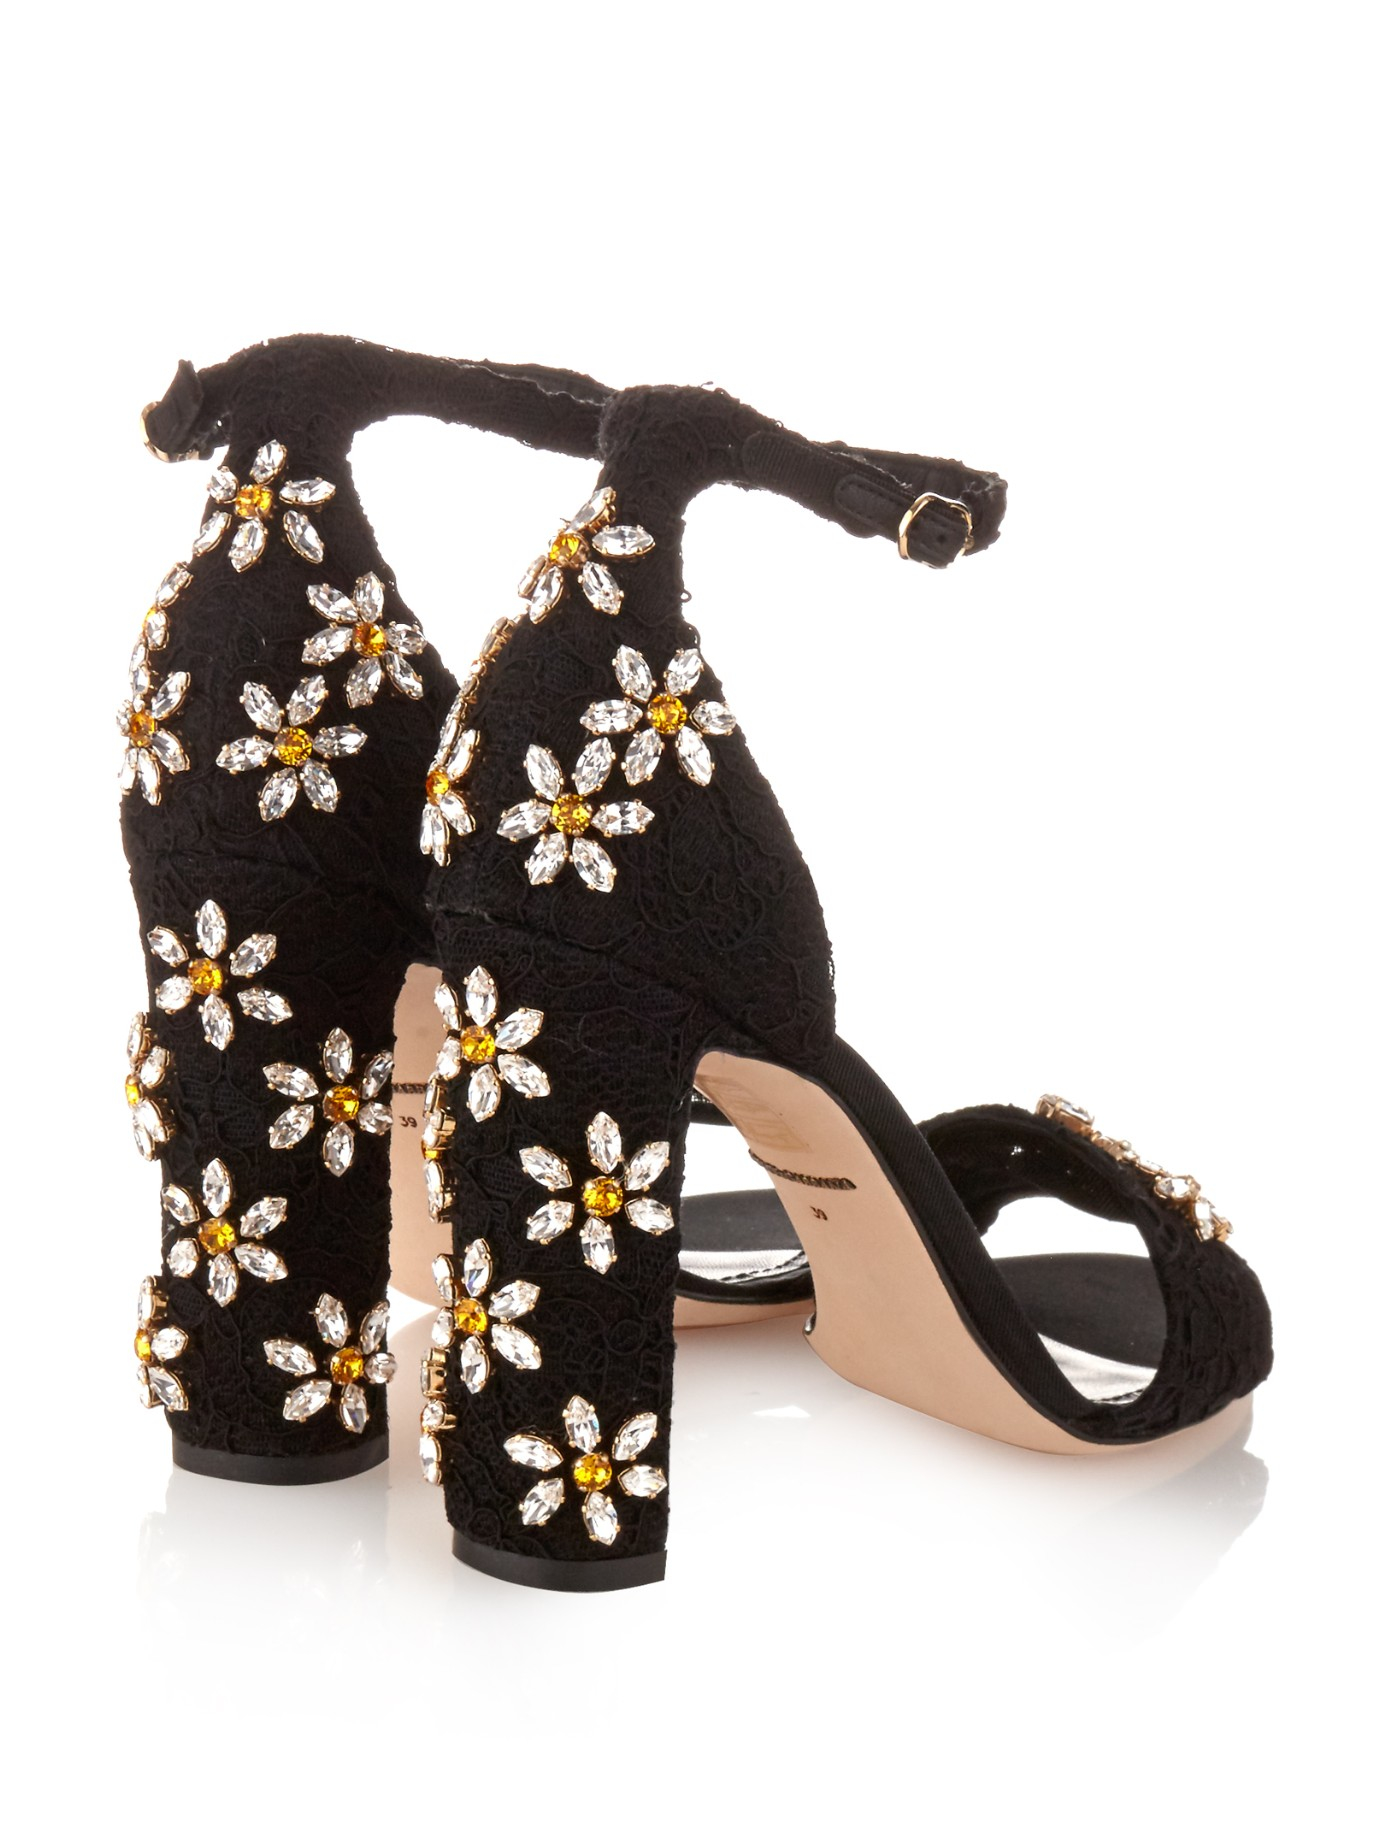 Lyst - Dolce & Gabbana Daisy Crystal-embellished Sandals in Black